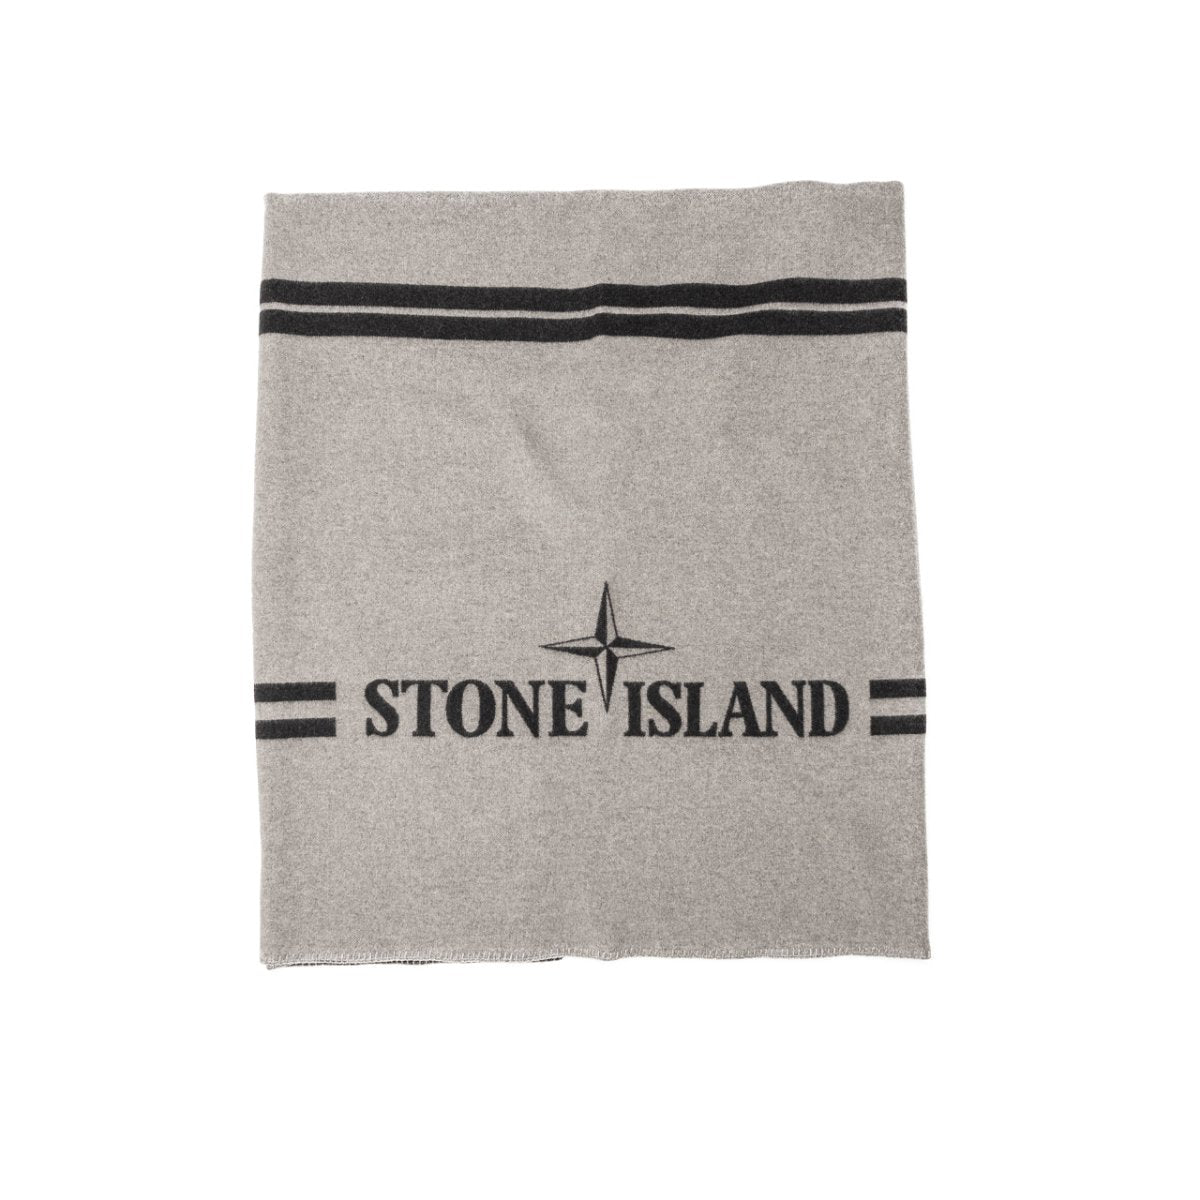 Stone Island Blanket (Grau / Schwarz)  - Allike Store